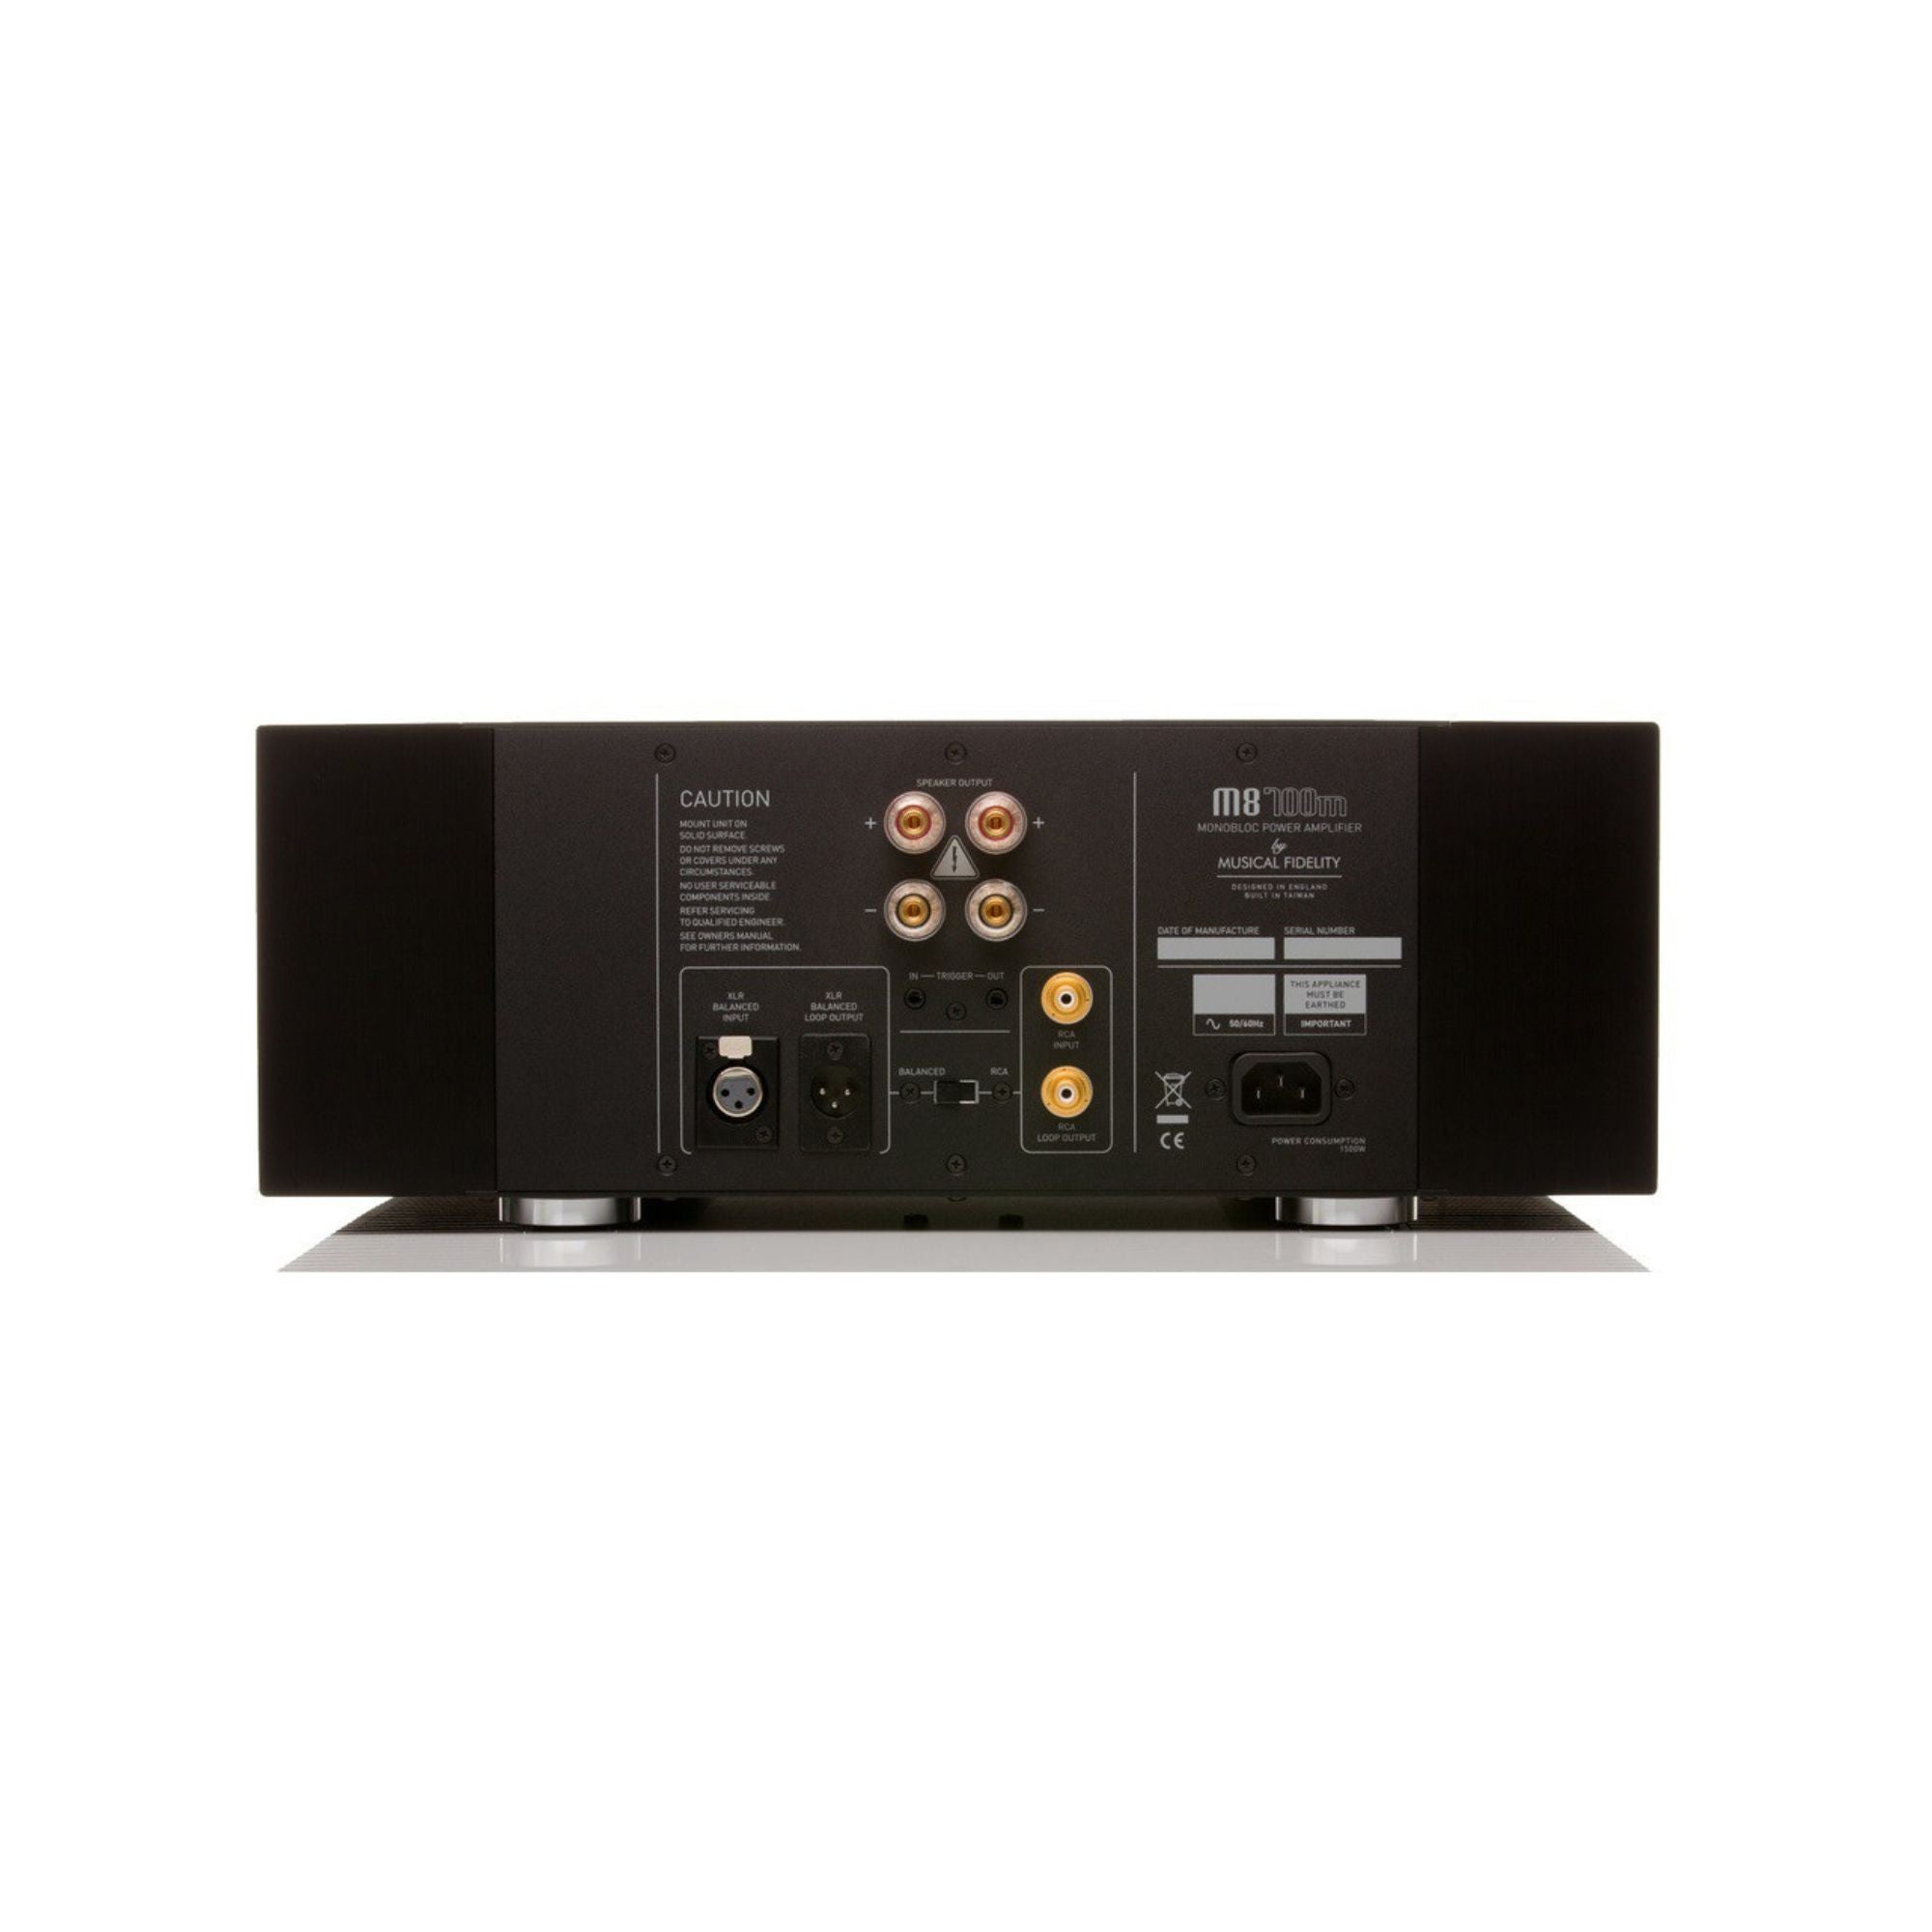 Musical Fidelity M8s-700m - Power Amplifier, Musical Fidelity, Power Amplifier - AVStore.in